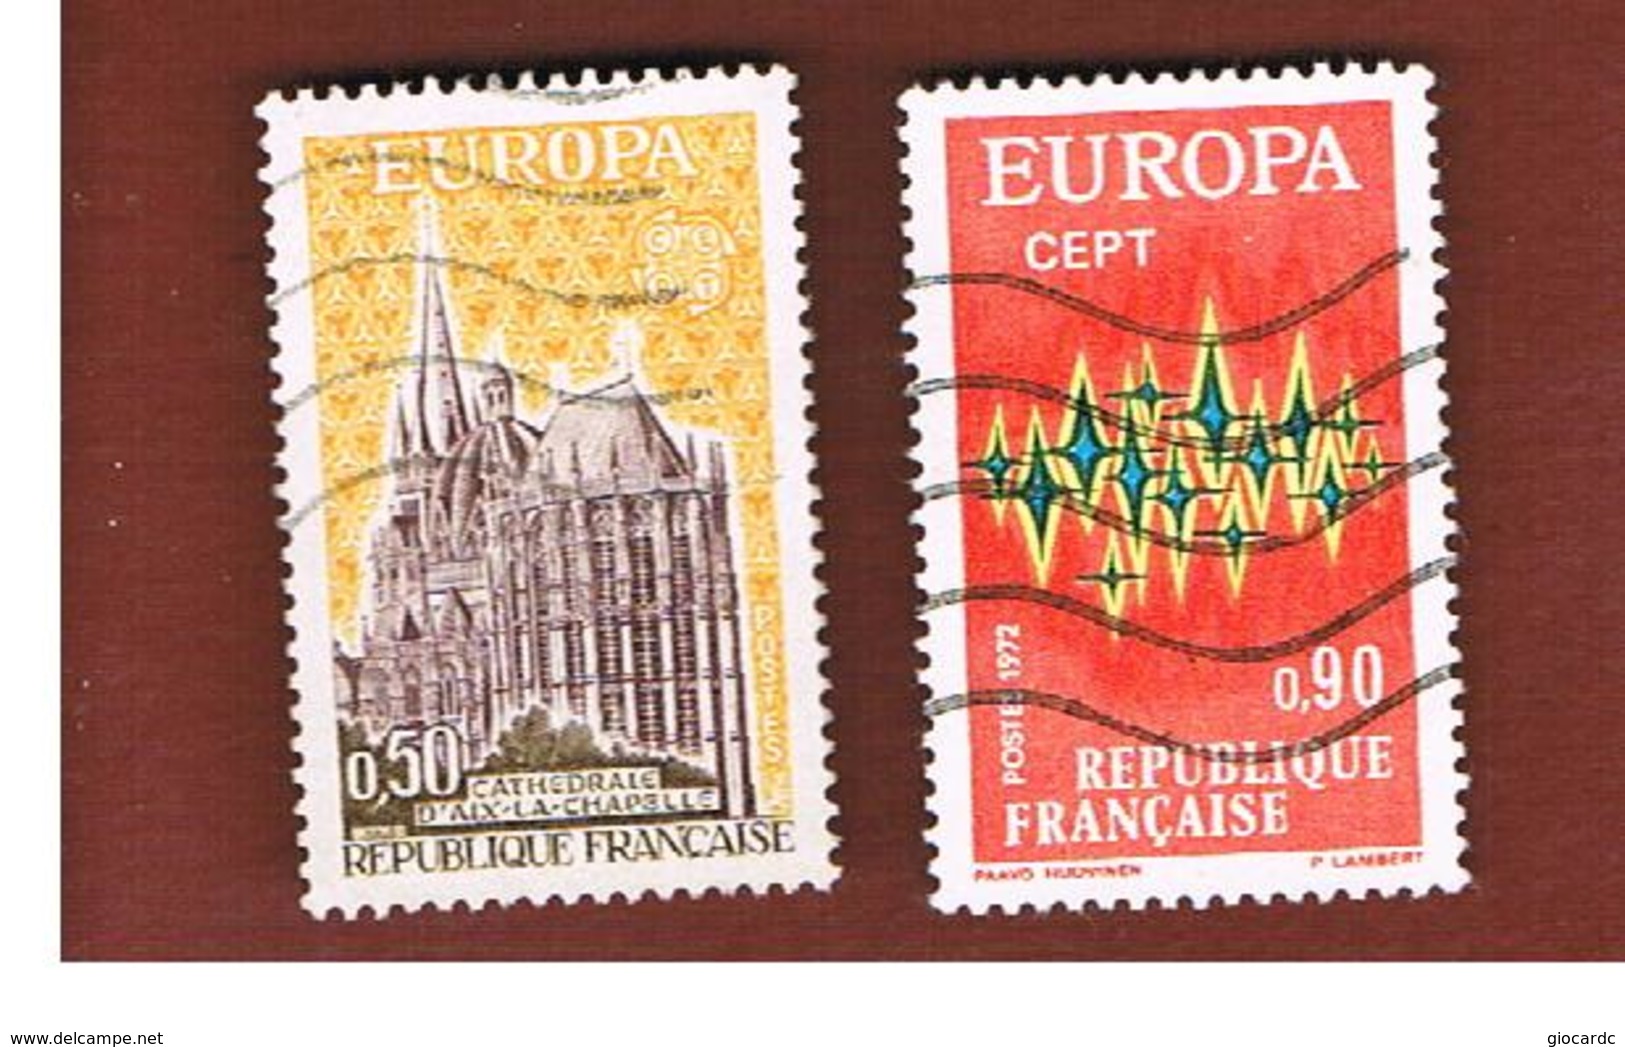 FRANCIA (FRANCE)  - 1972 EUROPA  - USED - 1972